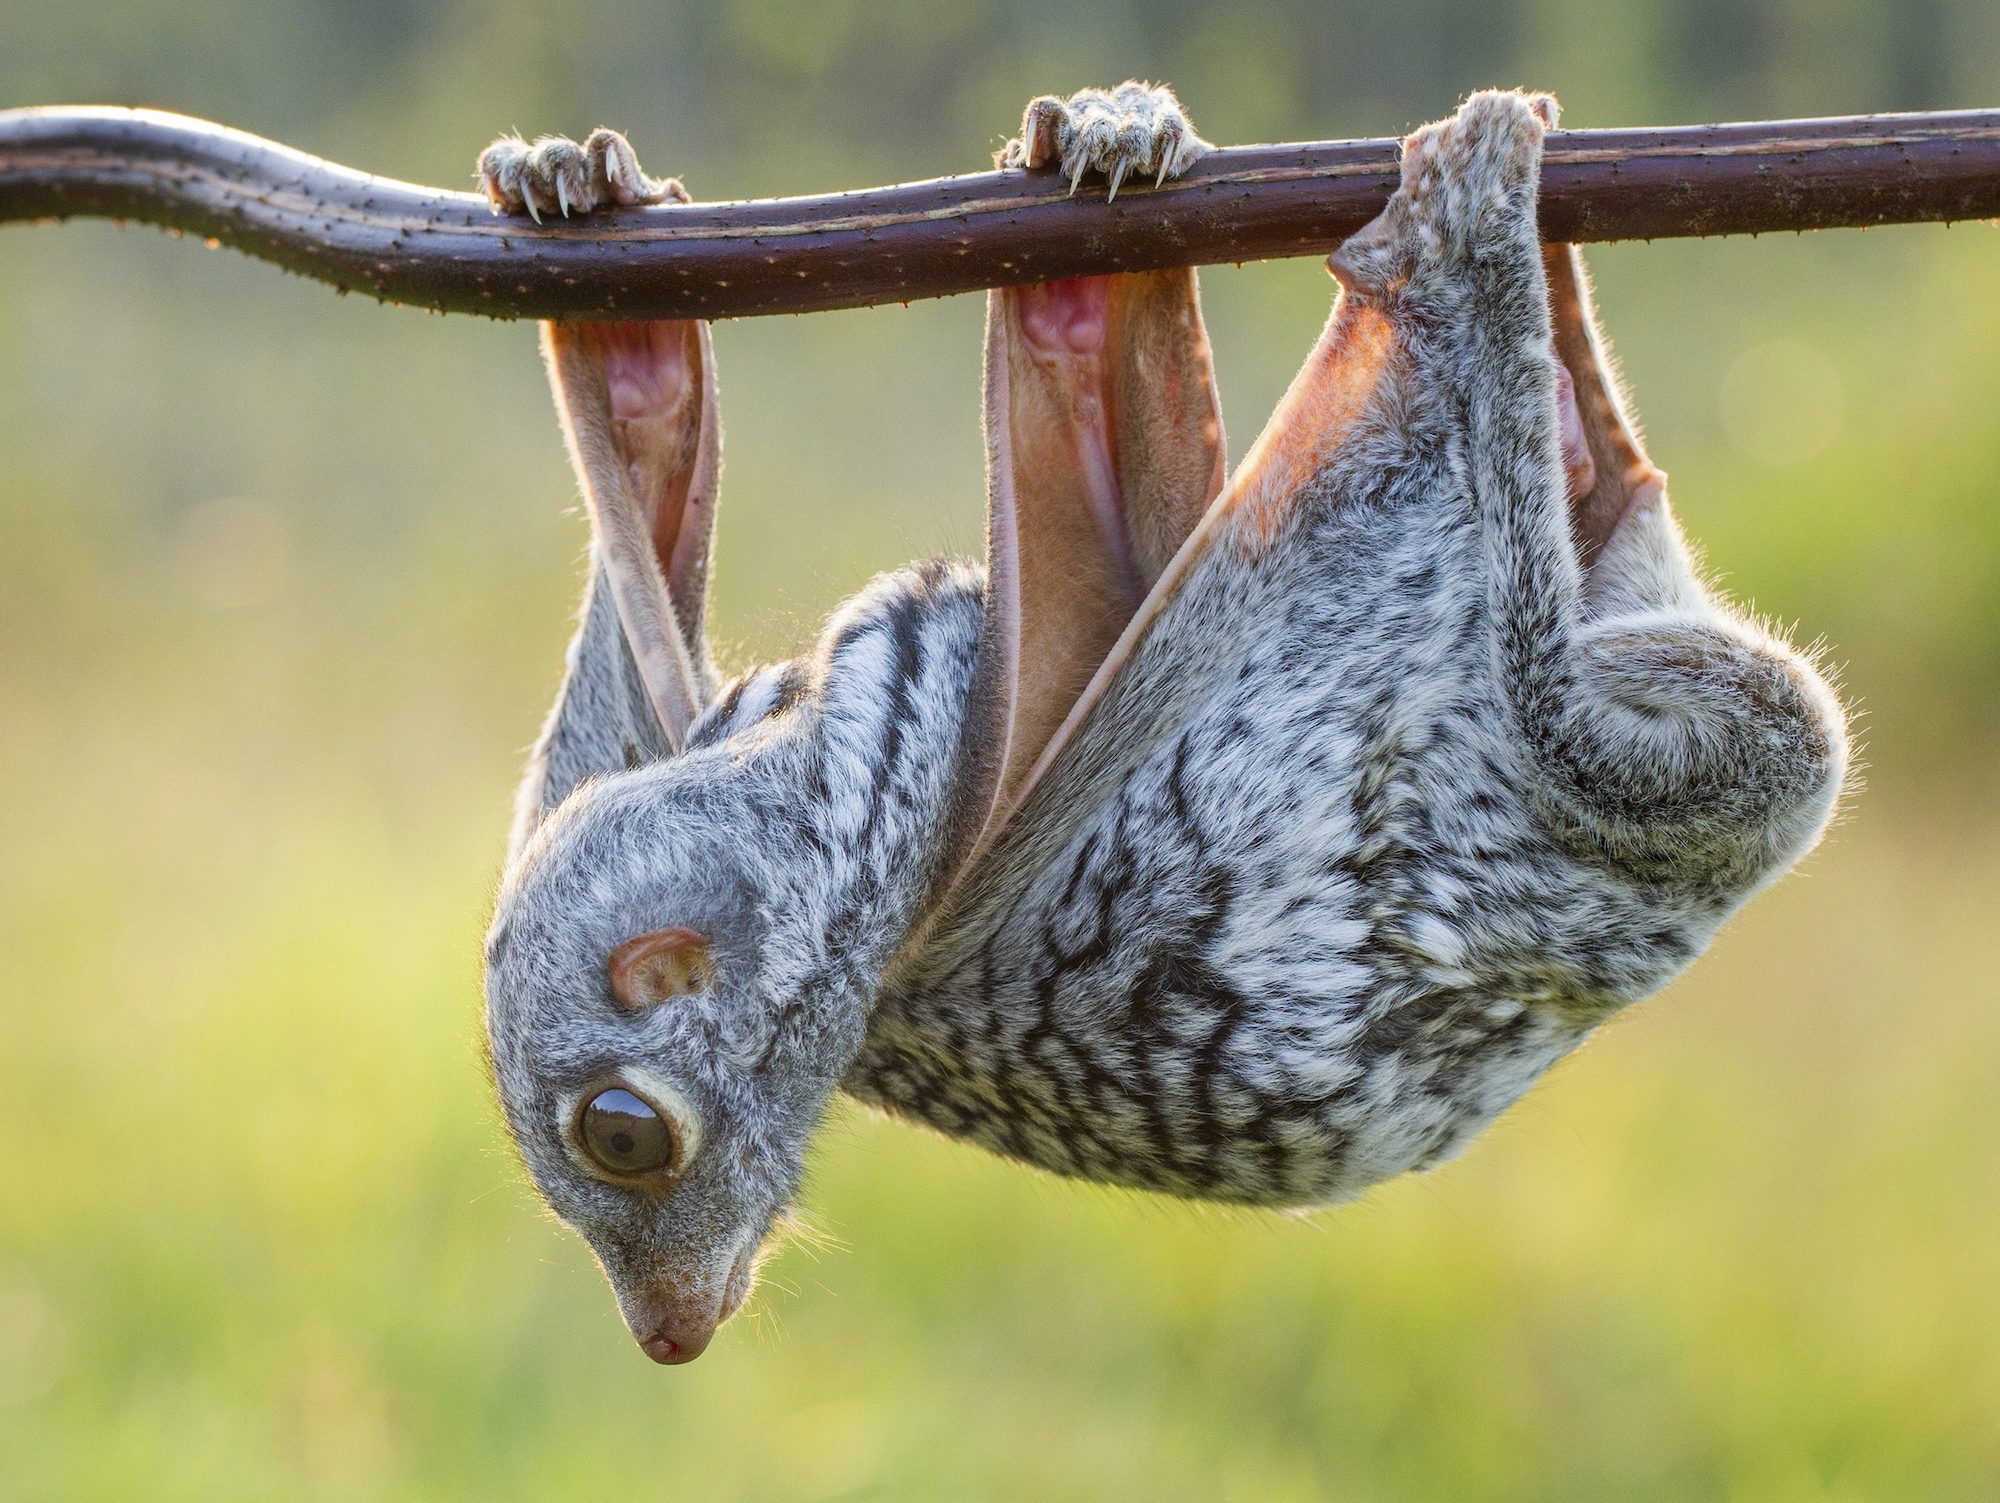 lemur hanging upsidedown from a branch